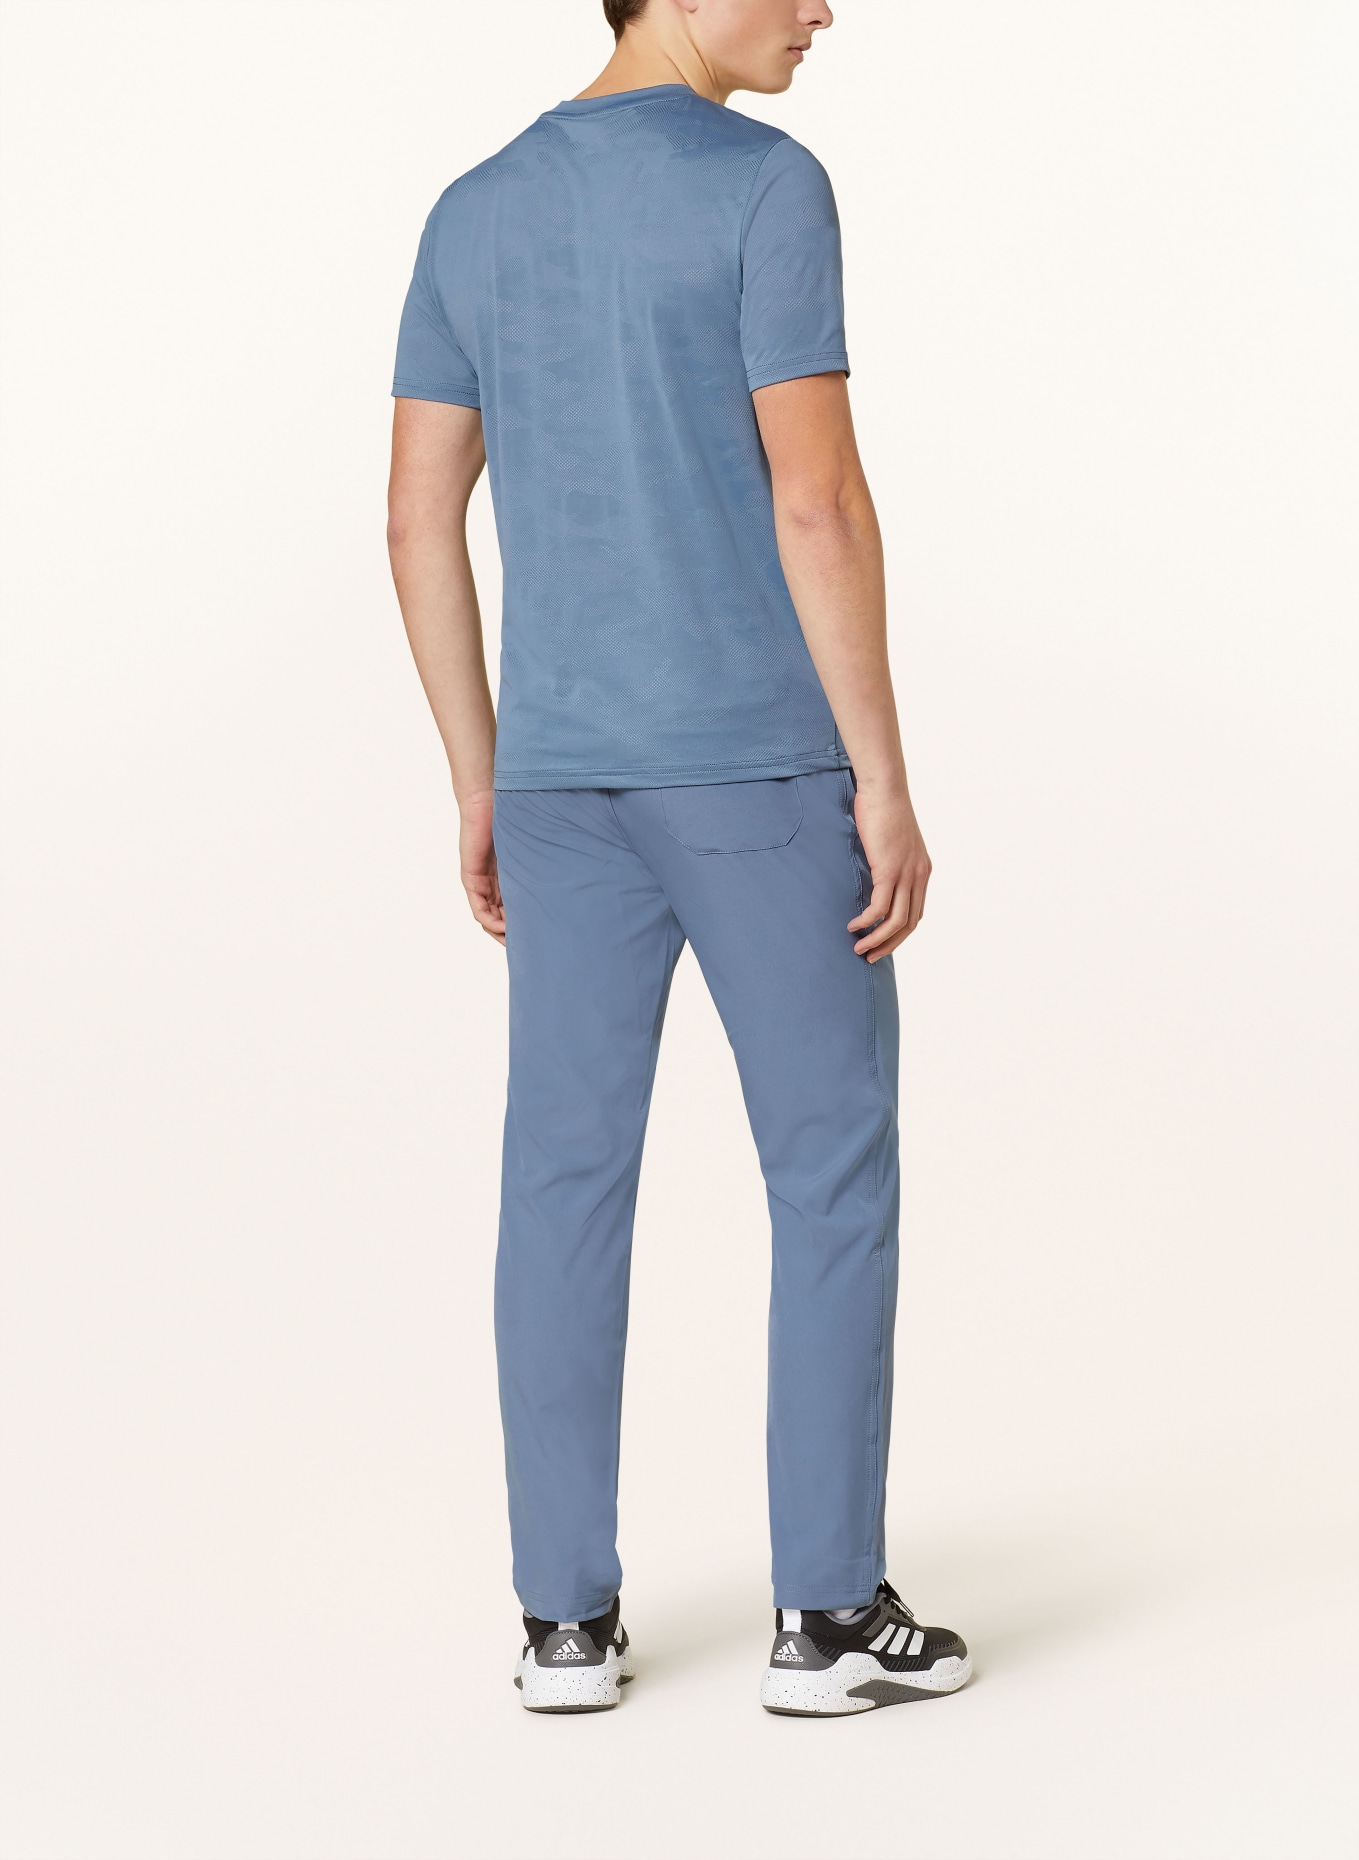 JOY sportswear T-shirt ARNO, Color: BLUE GRAY (Image 3)